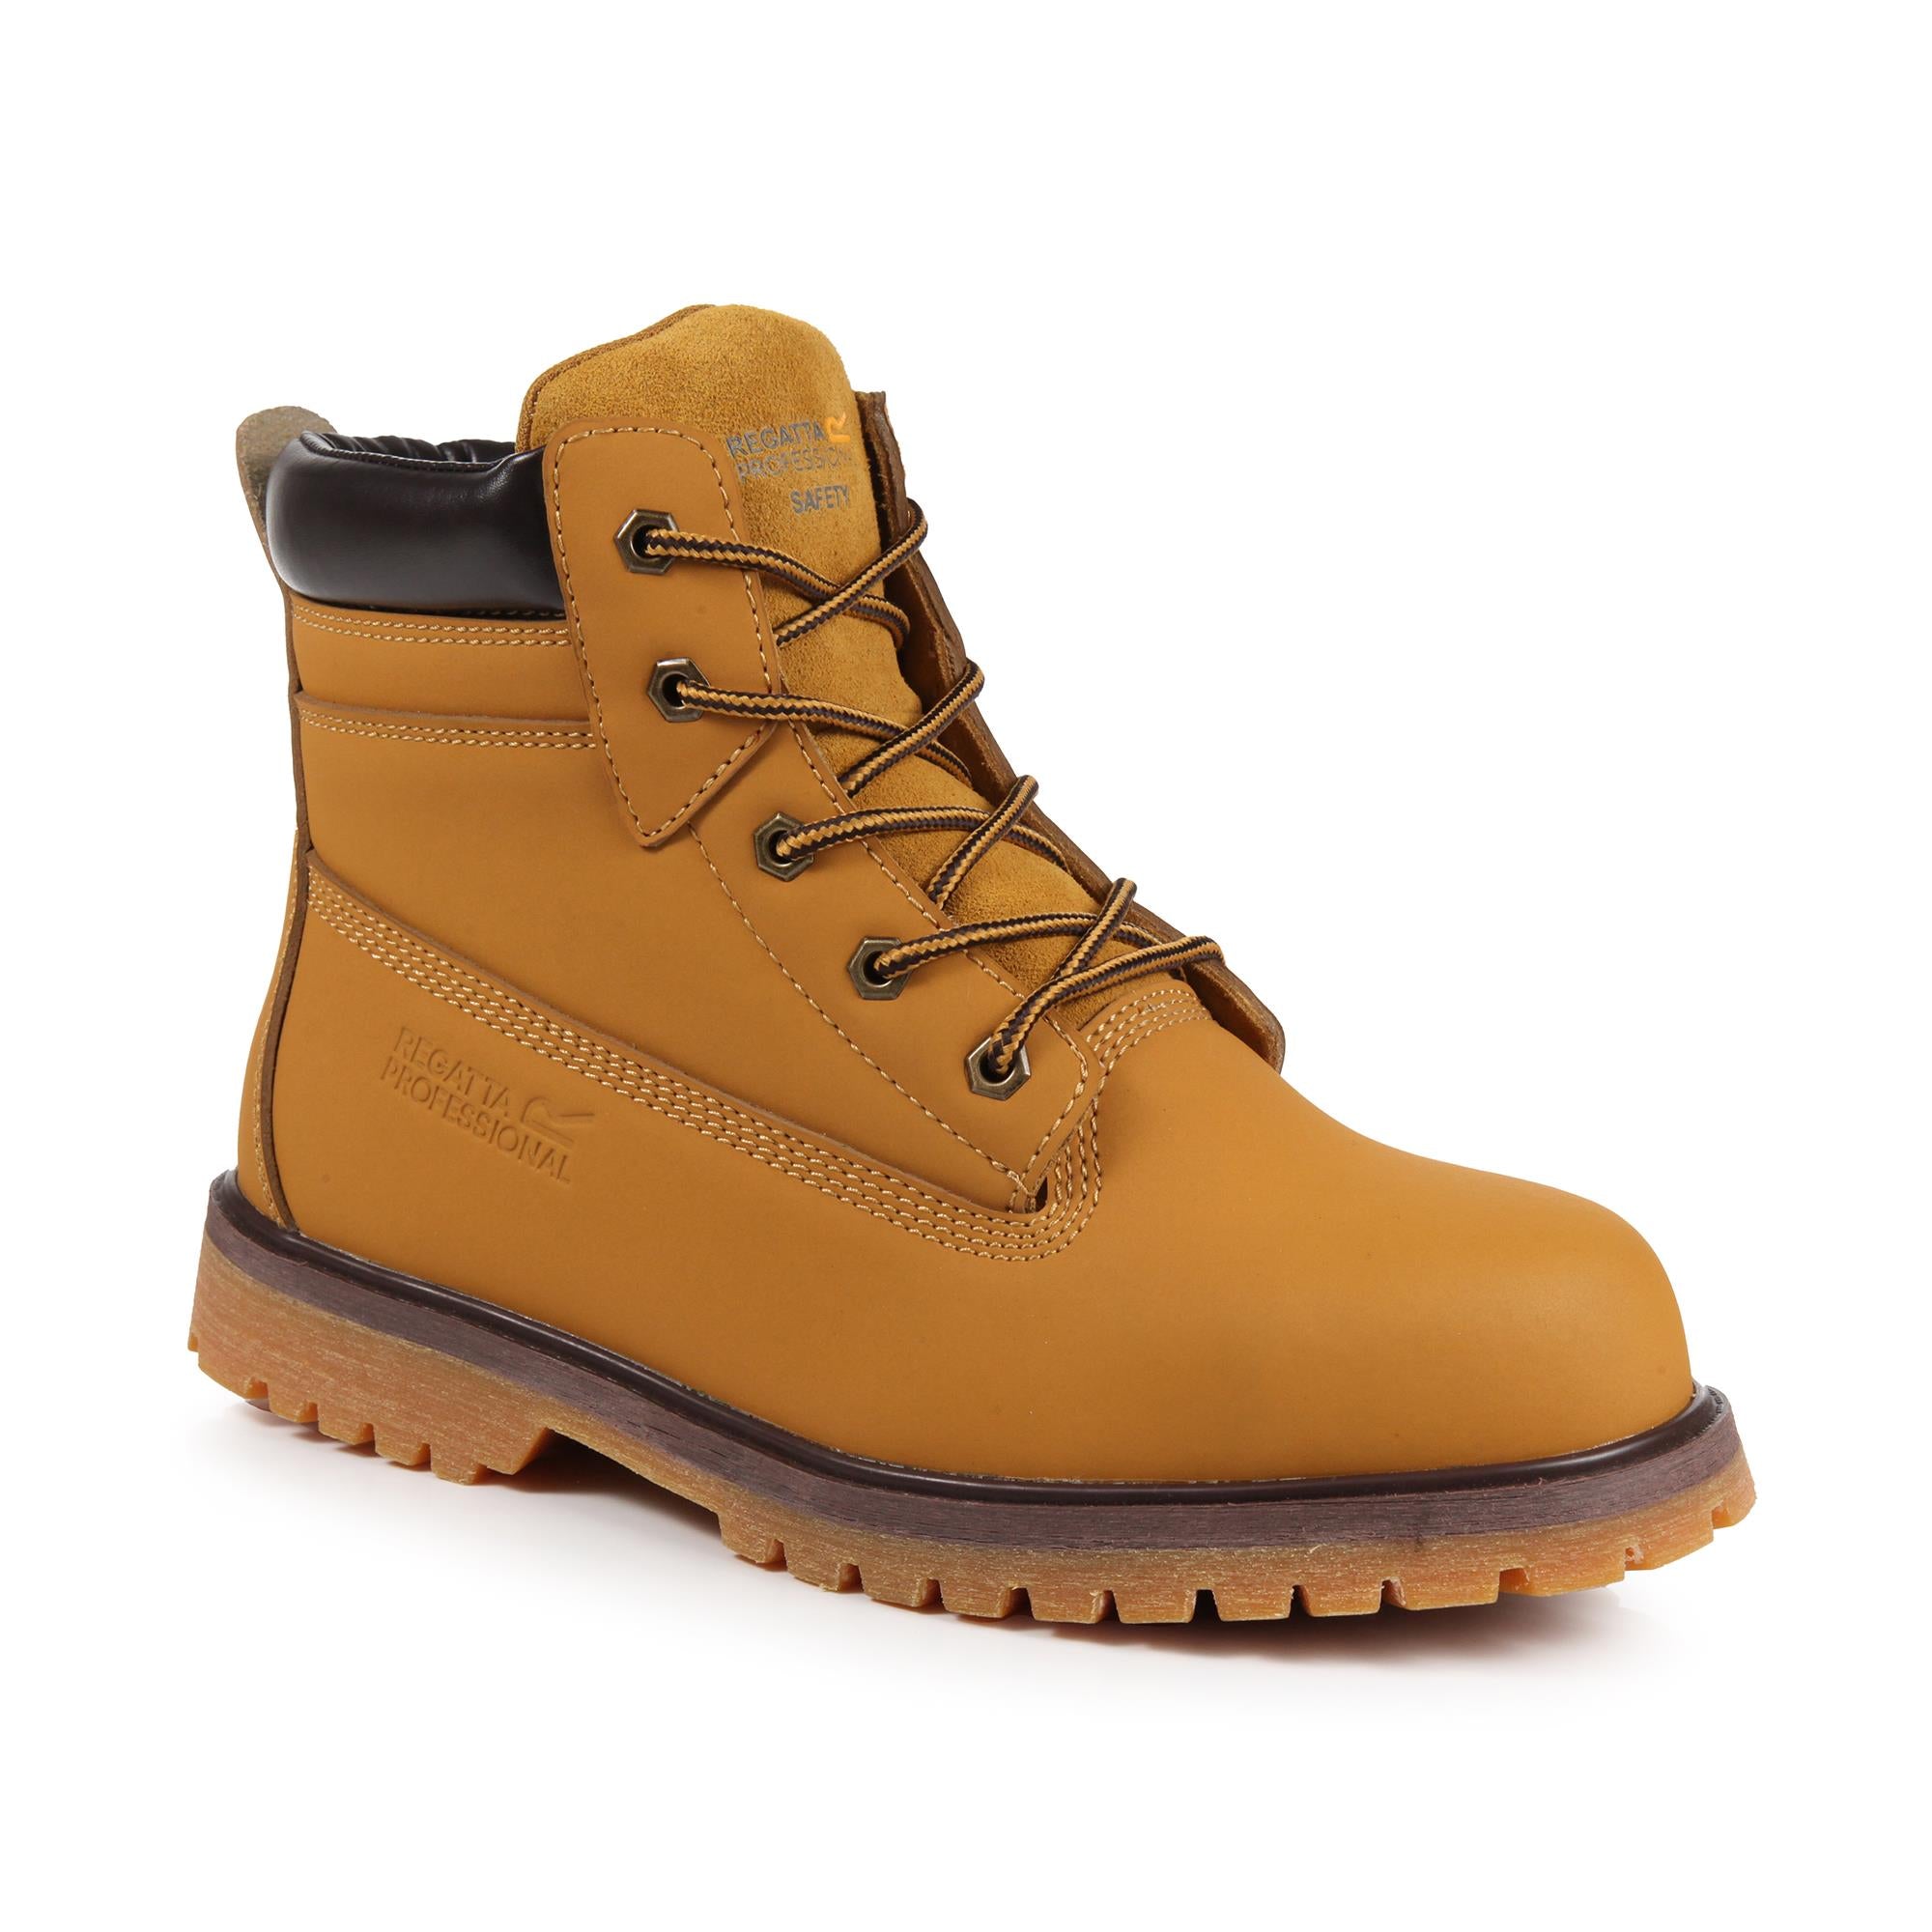 Regatta Expert S1P honey nubuck steel toe/midsole safety work boot #TRK208